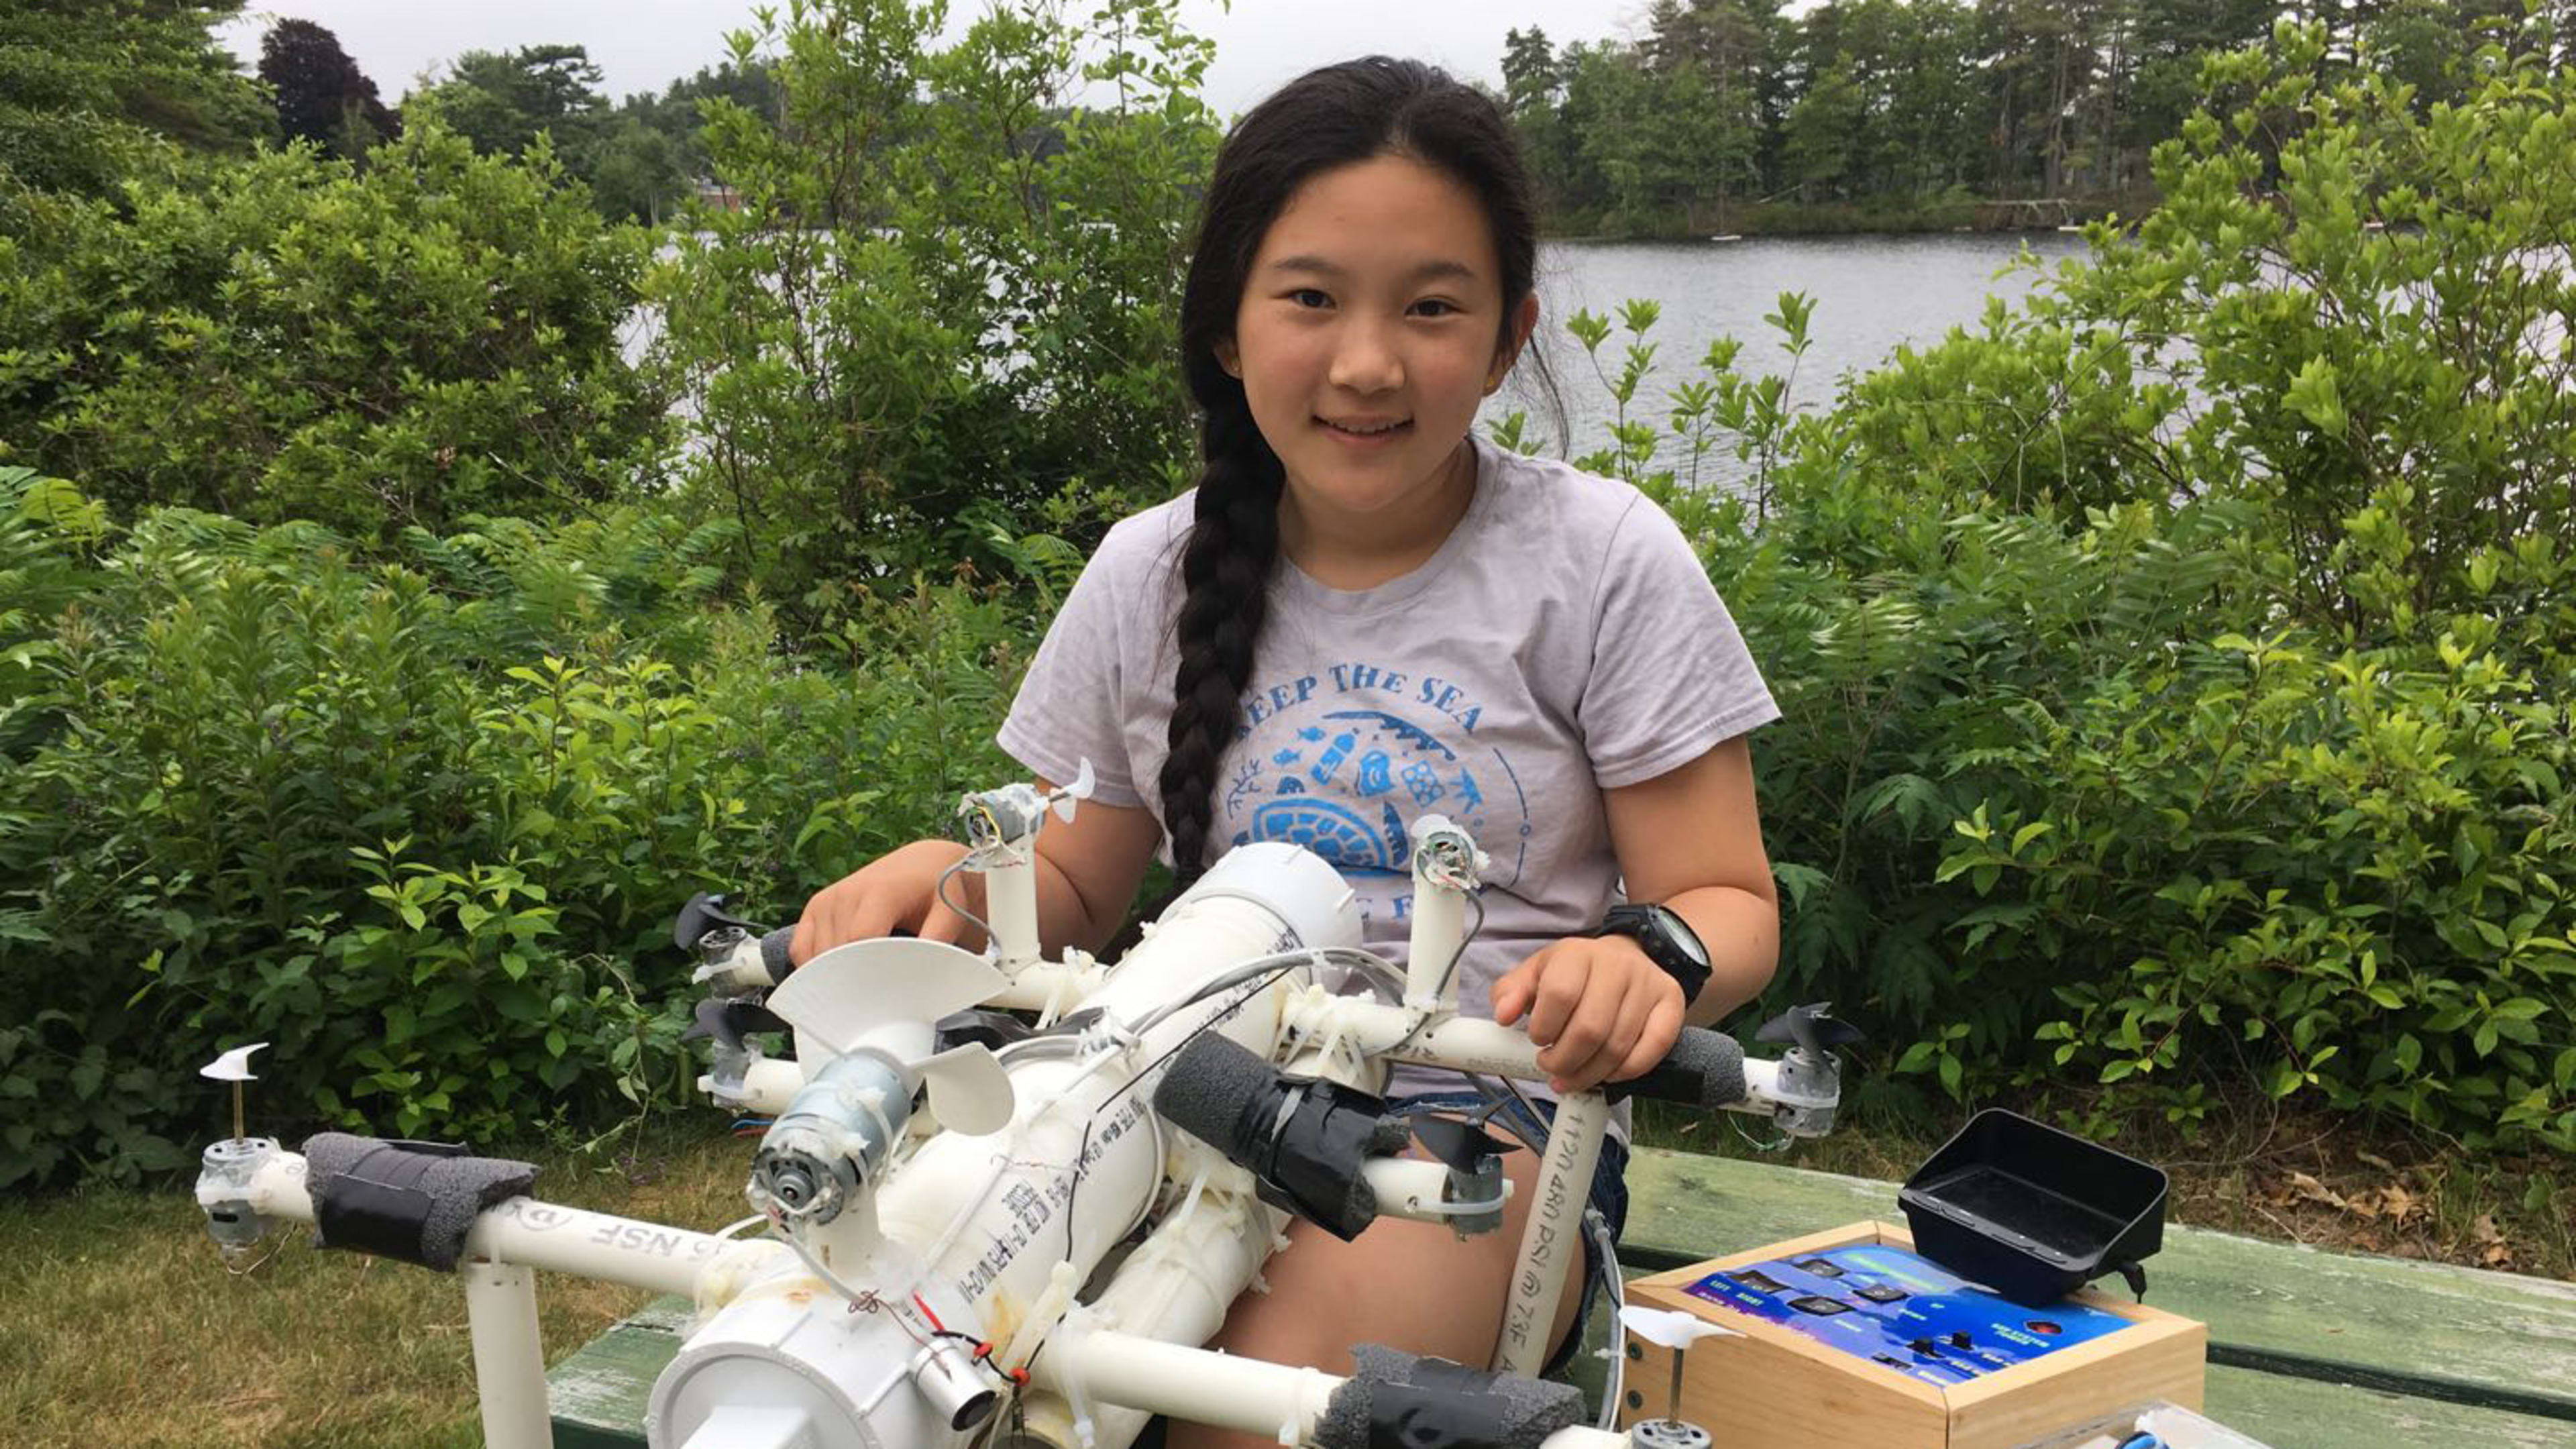 This sixth-grade inventor built a robot to hunt ocean plastic